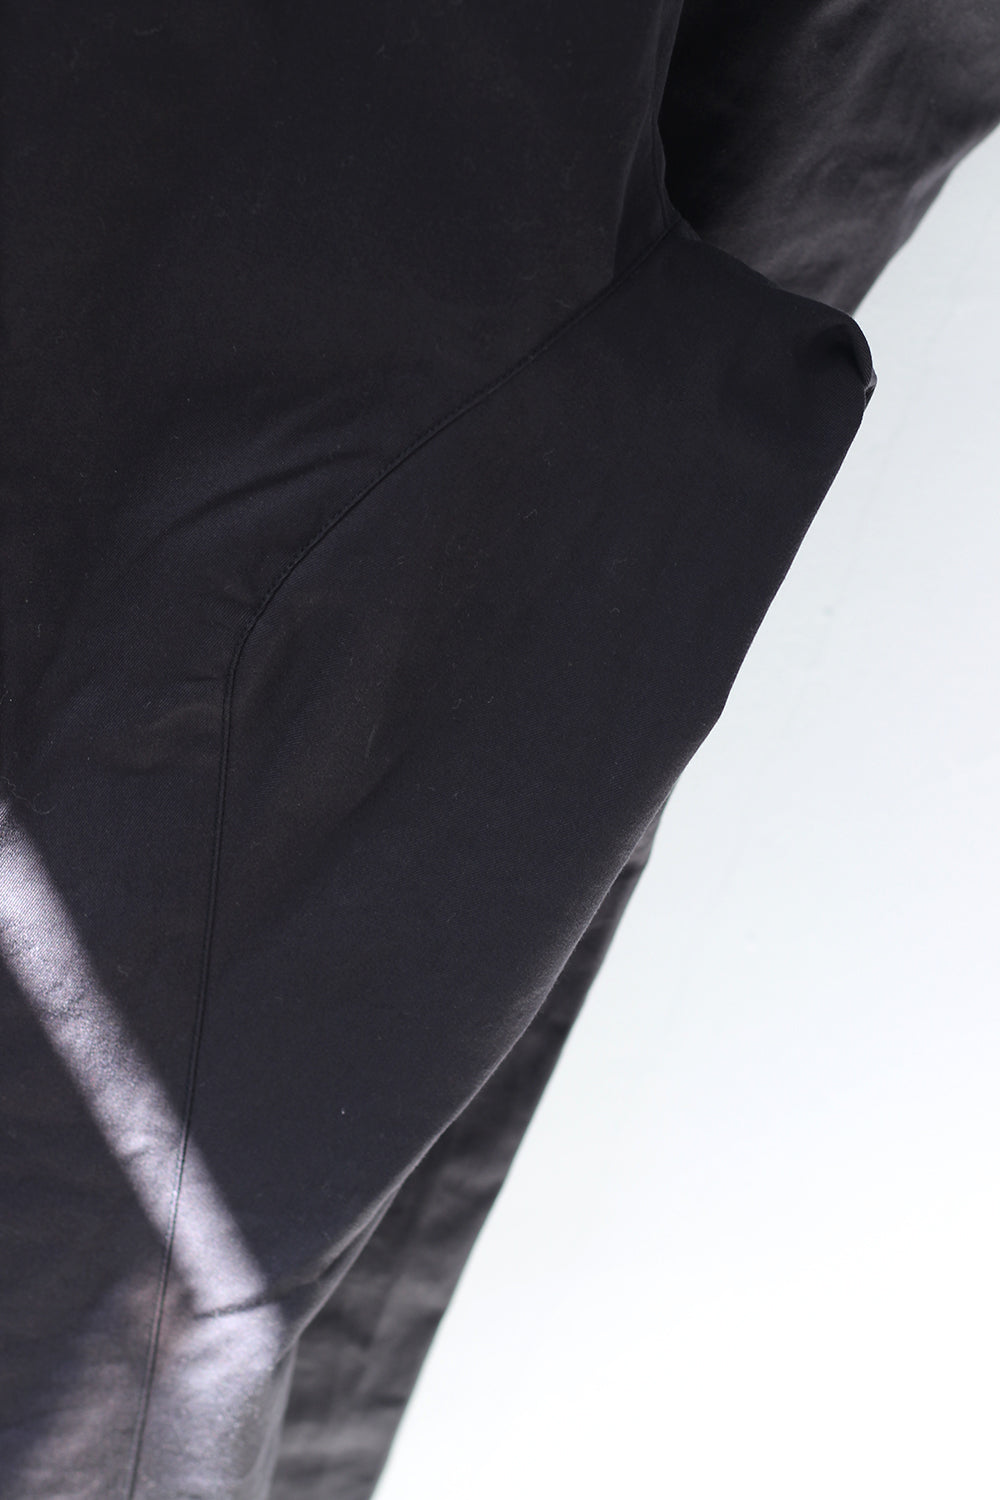 JUN MIKAMI × WILD THINGS "jump suit" (black)